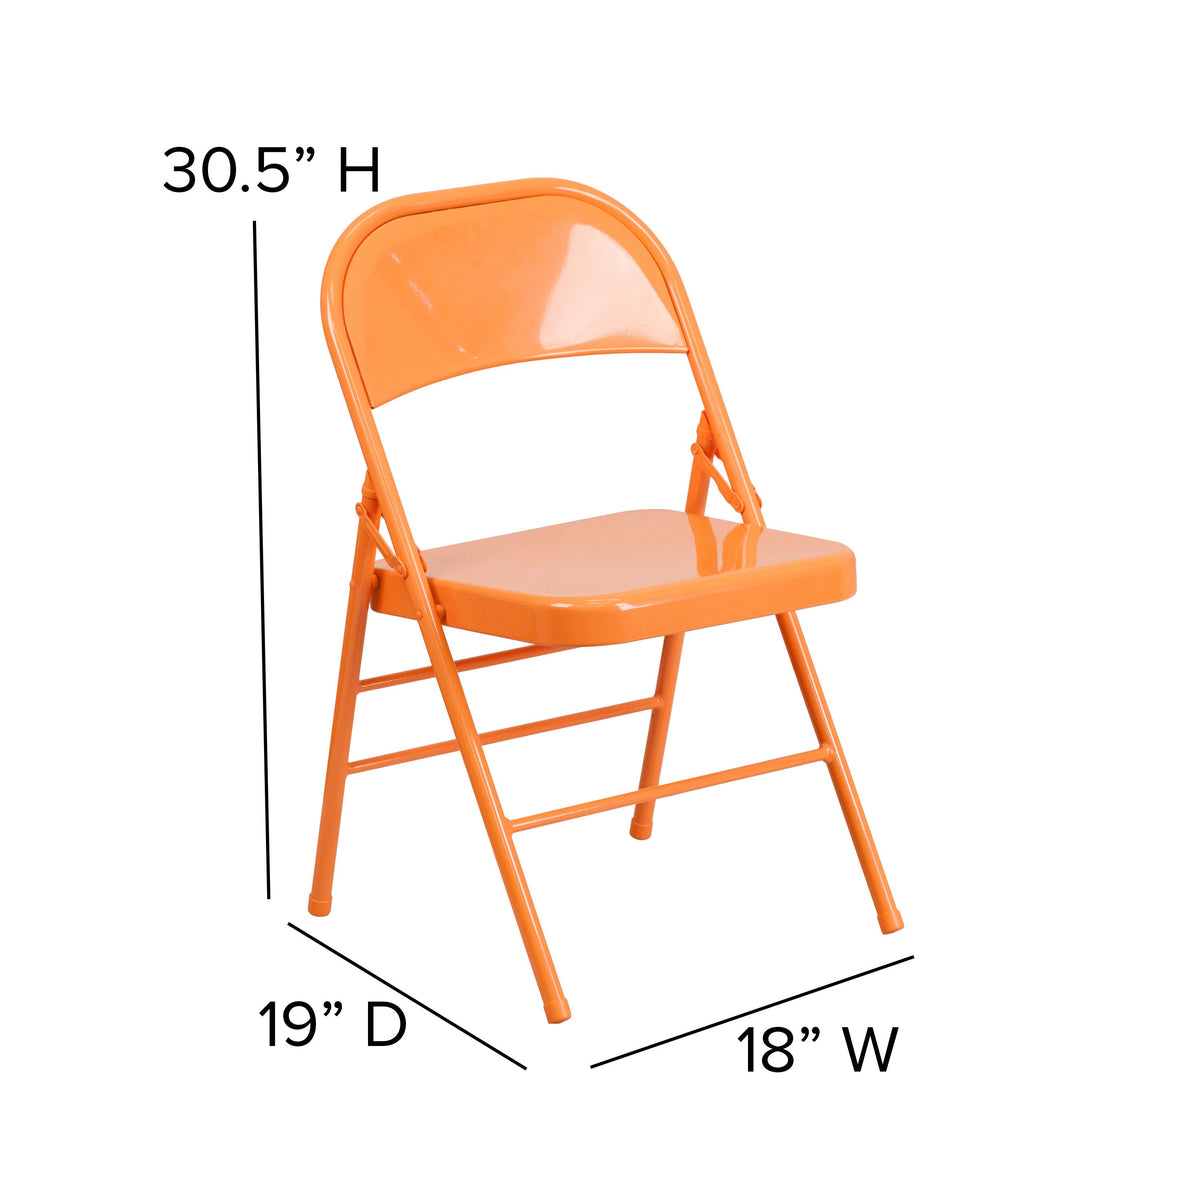 Orange Marmalade |#| Orange Marmalade Triple Braced & Double Hinged Metal Folding Chair - Vivid Color